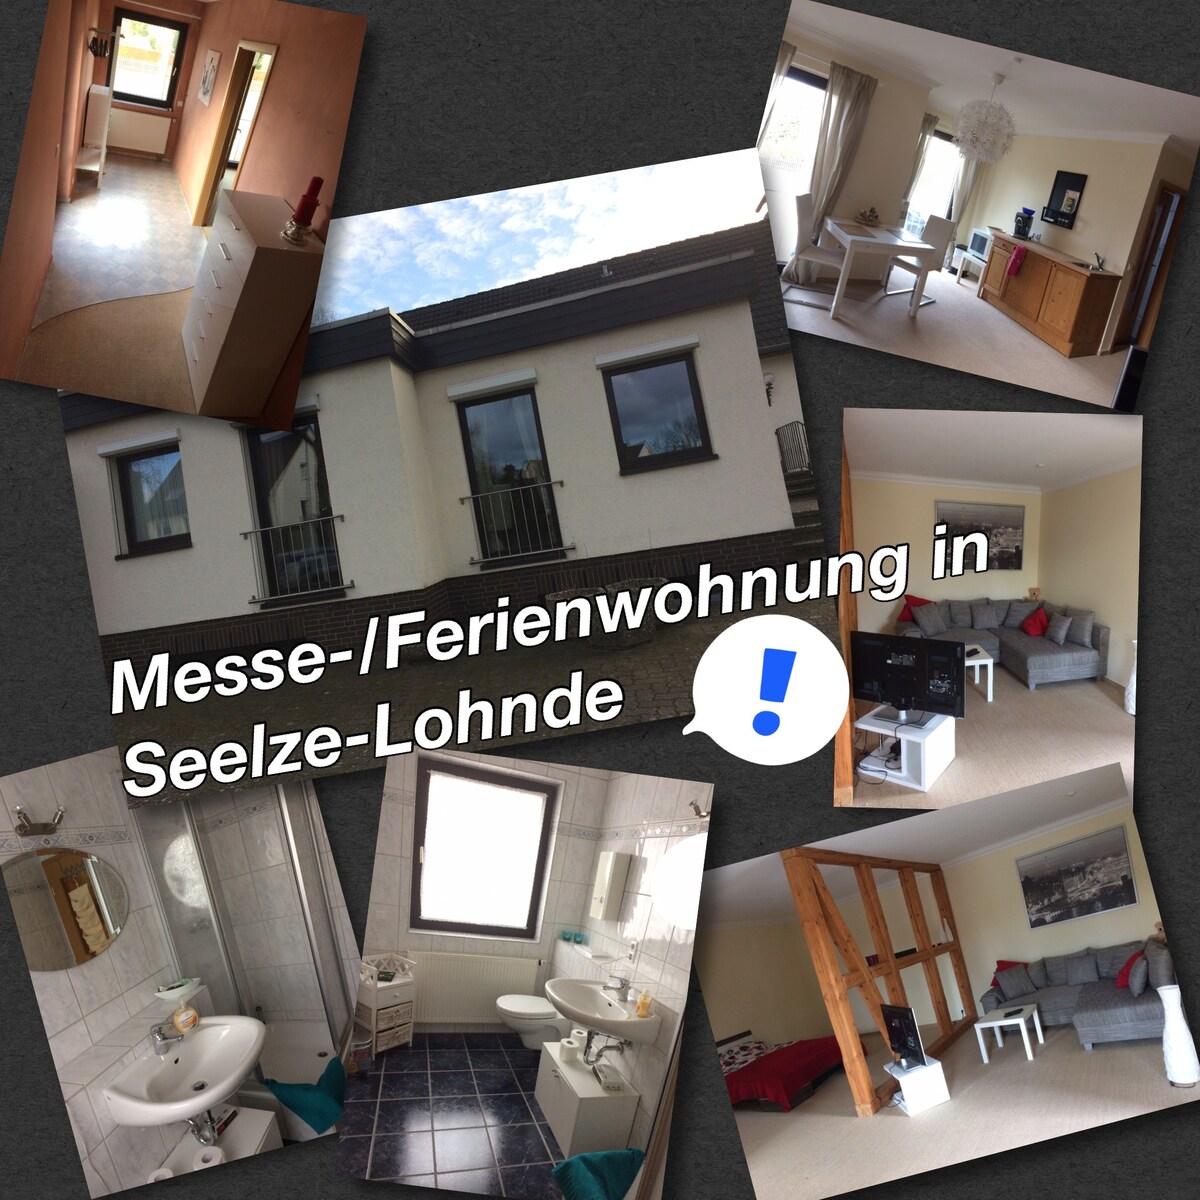 Seelze-Lohnde的舒适交易会/度假公寓